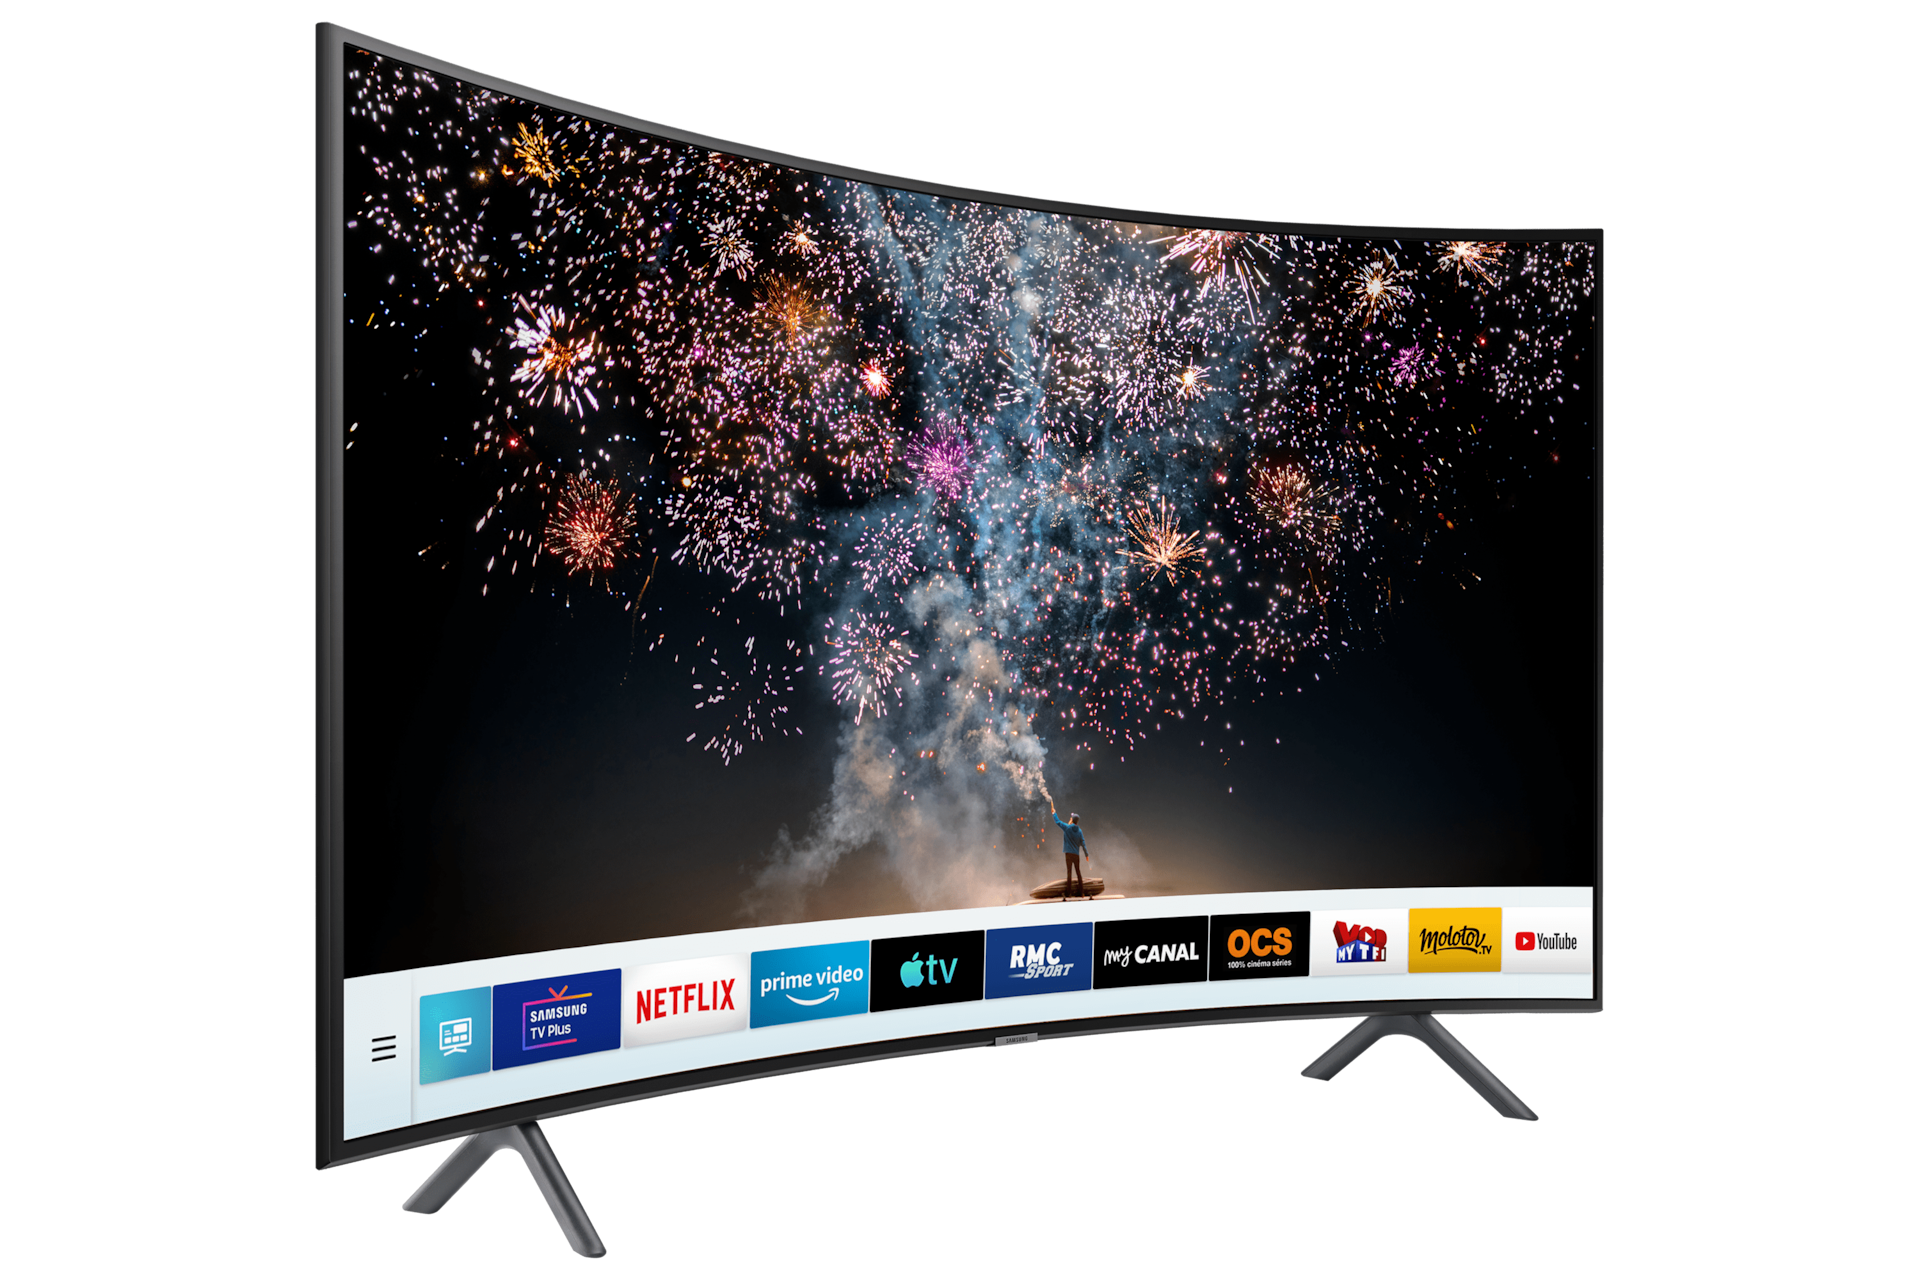 Smart TV 4K UHD 49 pouces RU7305 1500 PQI